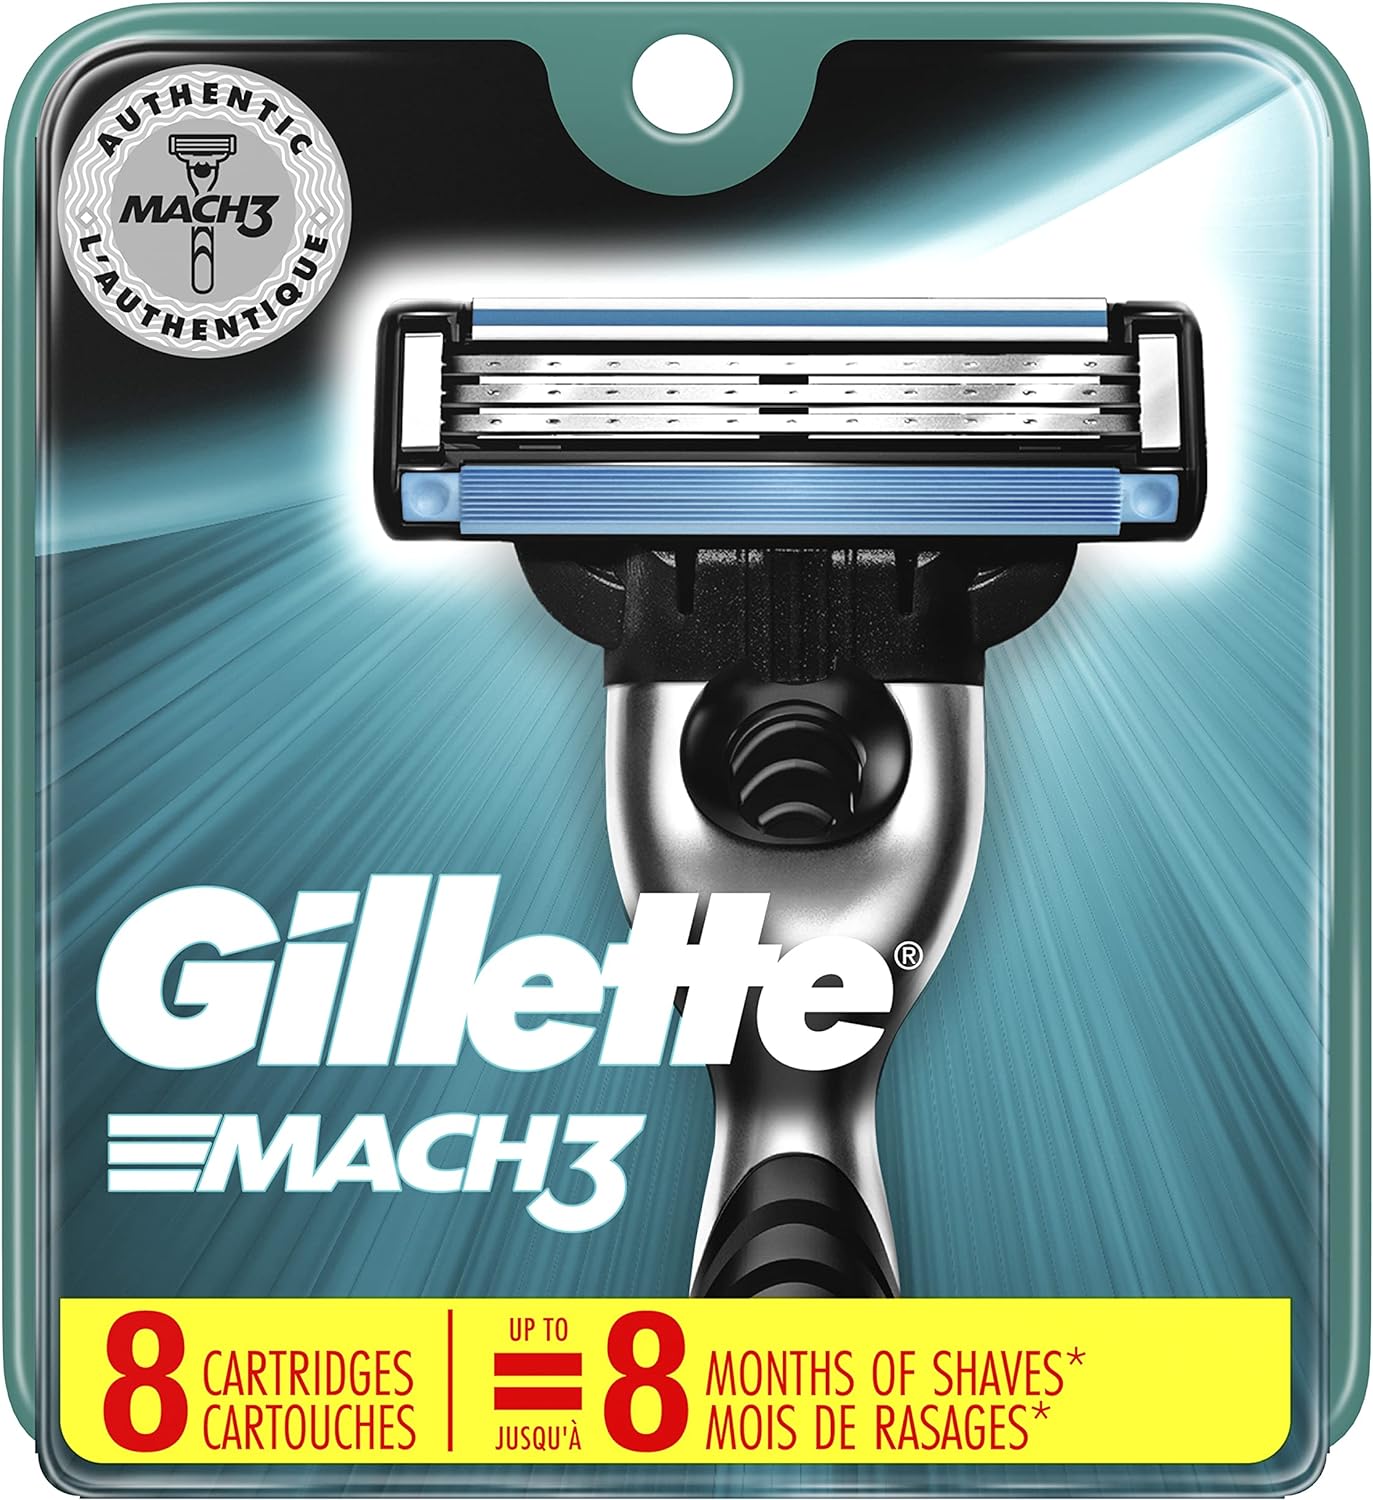 Gillette Mach 3 - 8 cartridges/blade refills